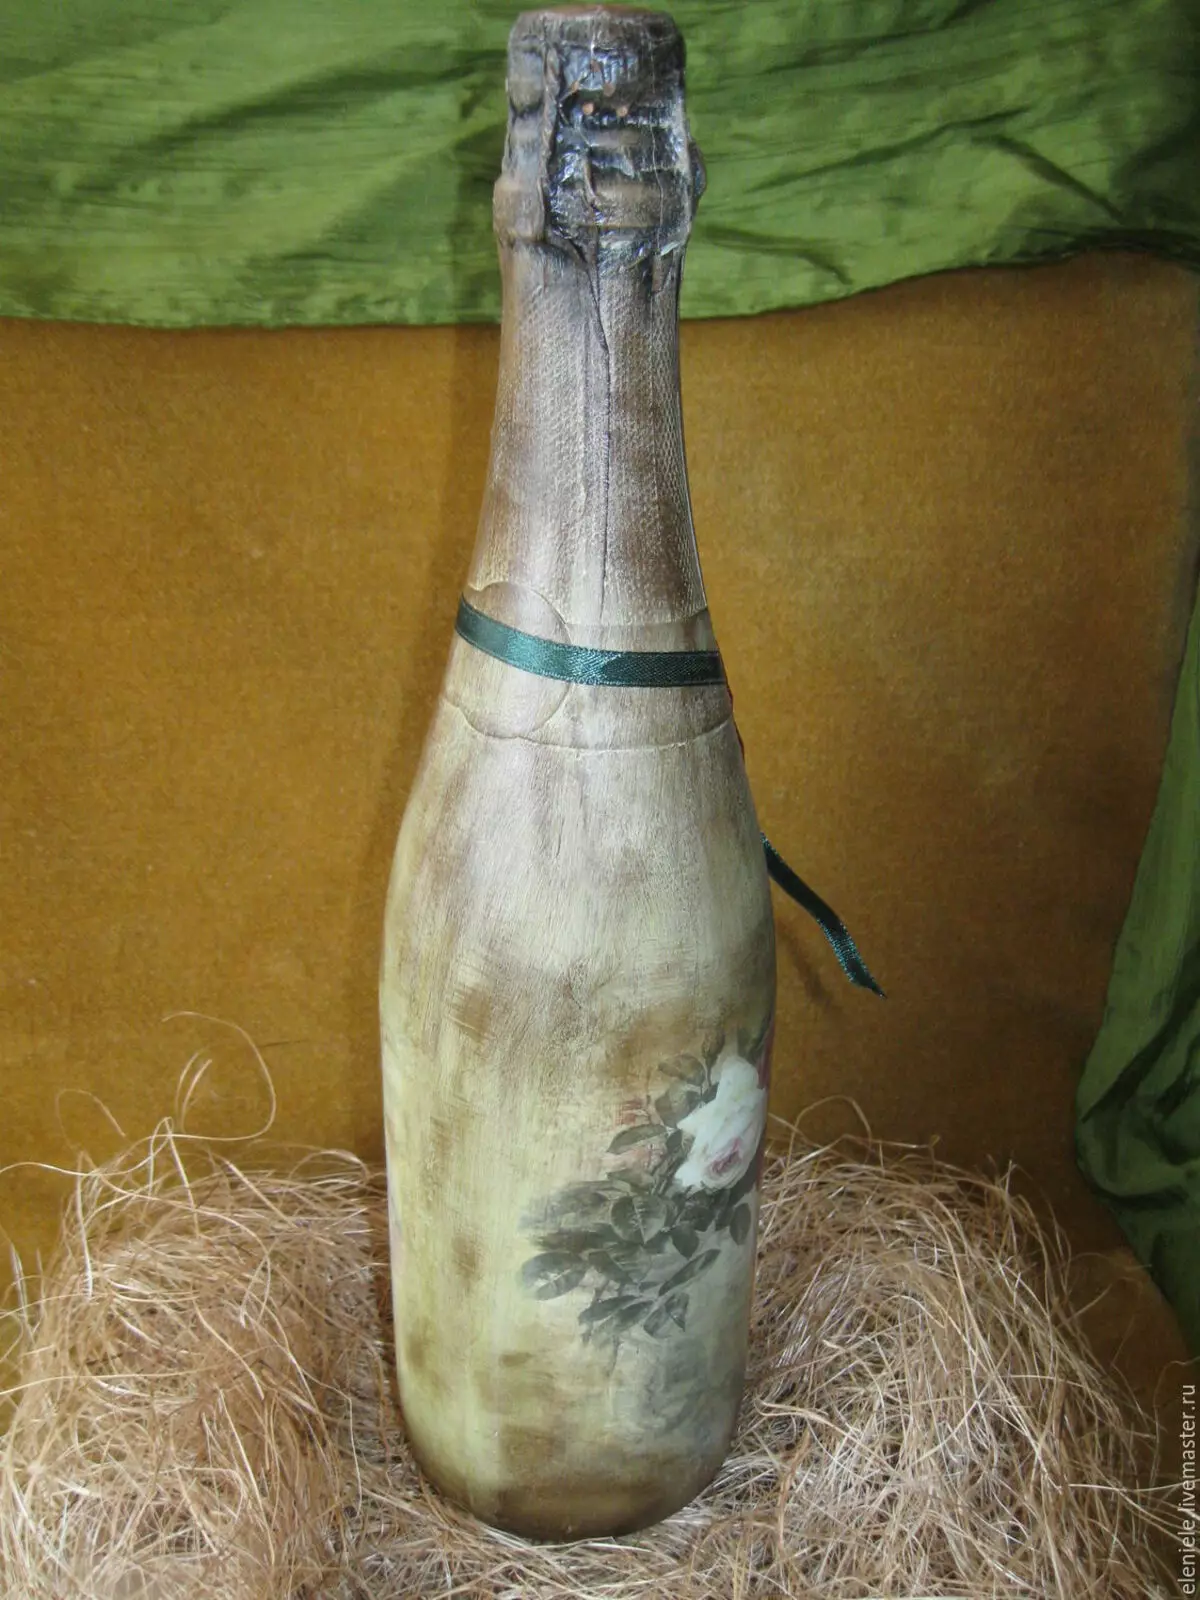 Decoupage of Champagne Bottle (42 Foto): Idea pada 8 Mac dan pada hari lahir wanita, kelas induk di Decoupage dengan tangan mereka sendiri 19090_7